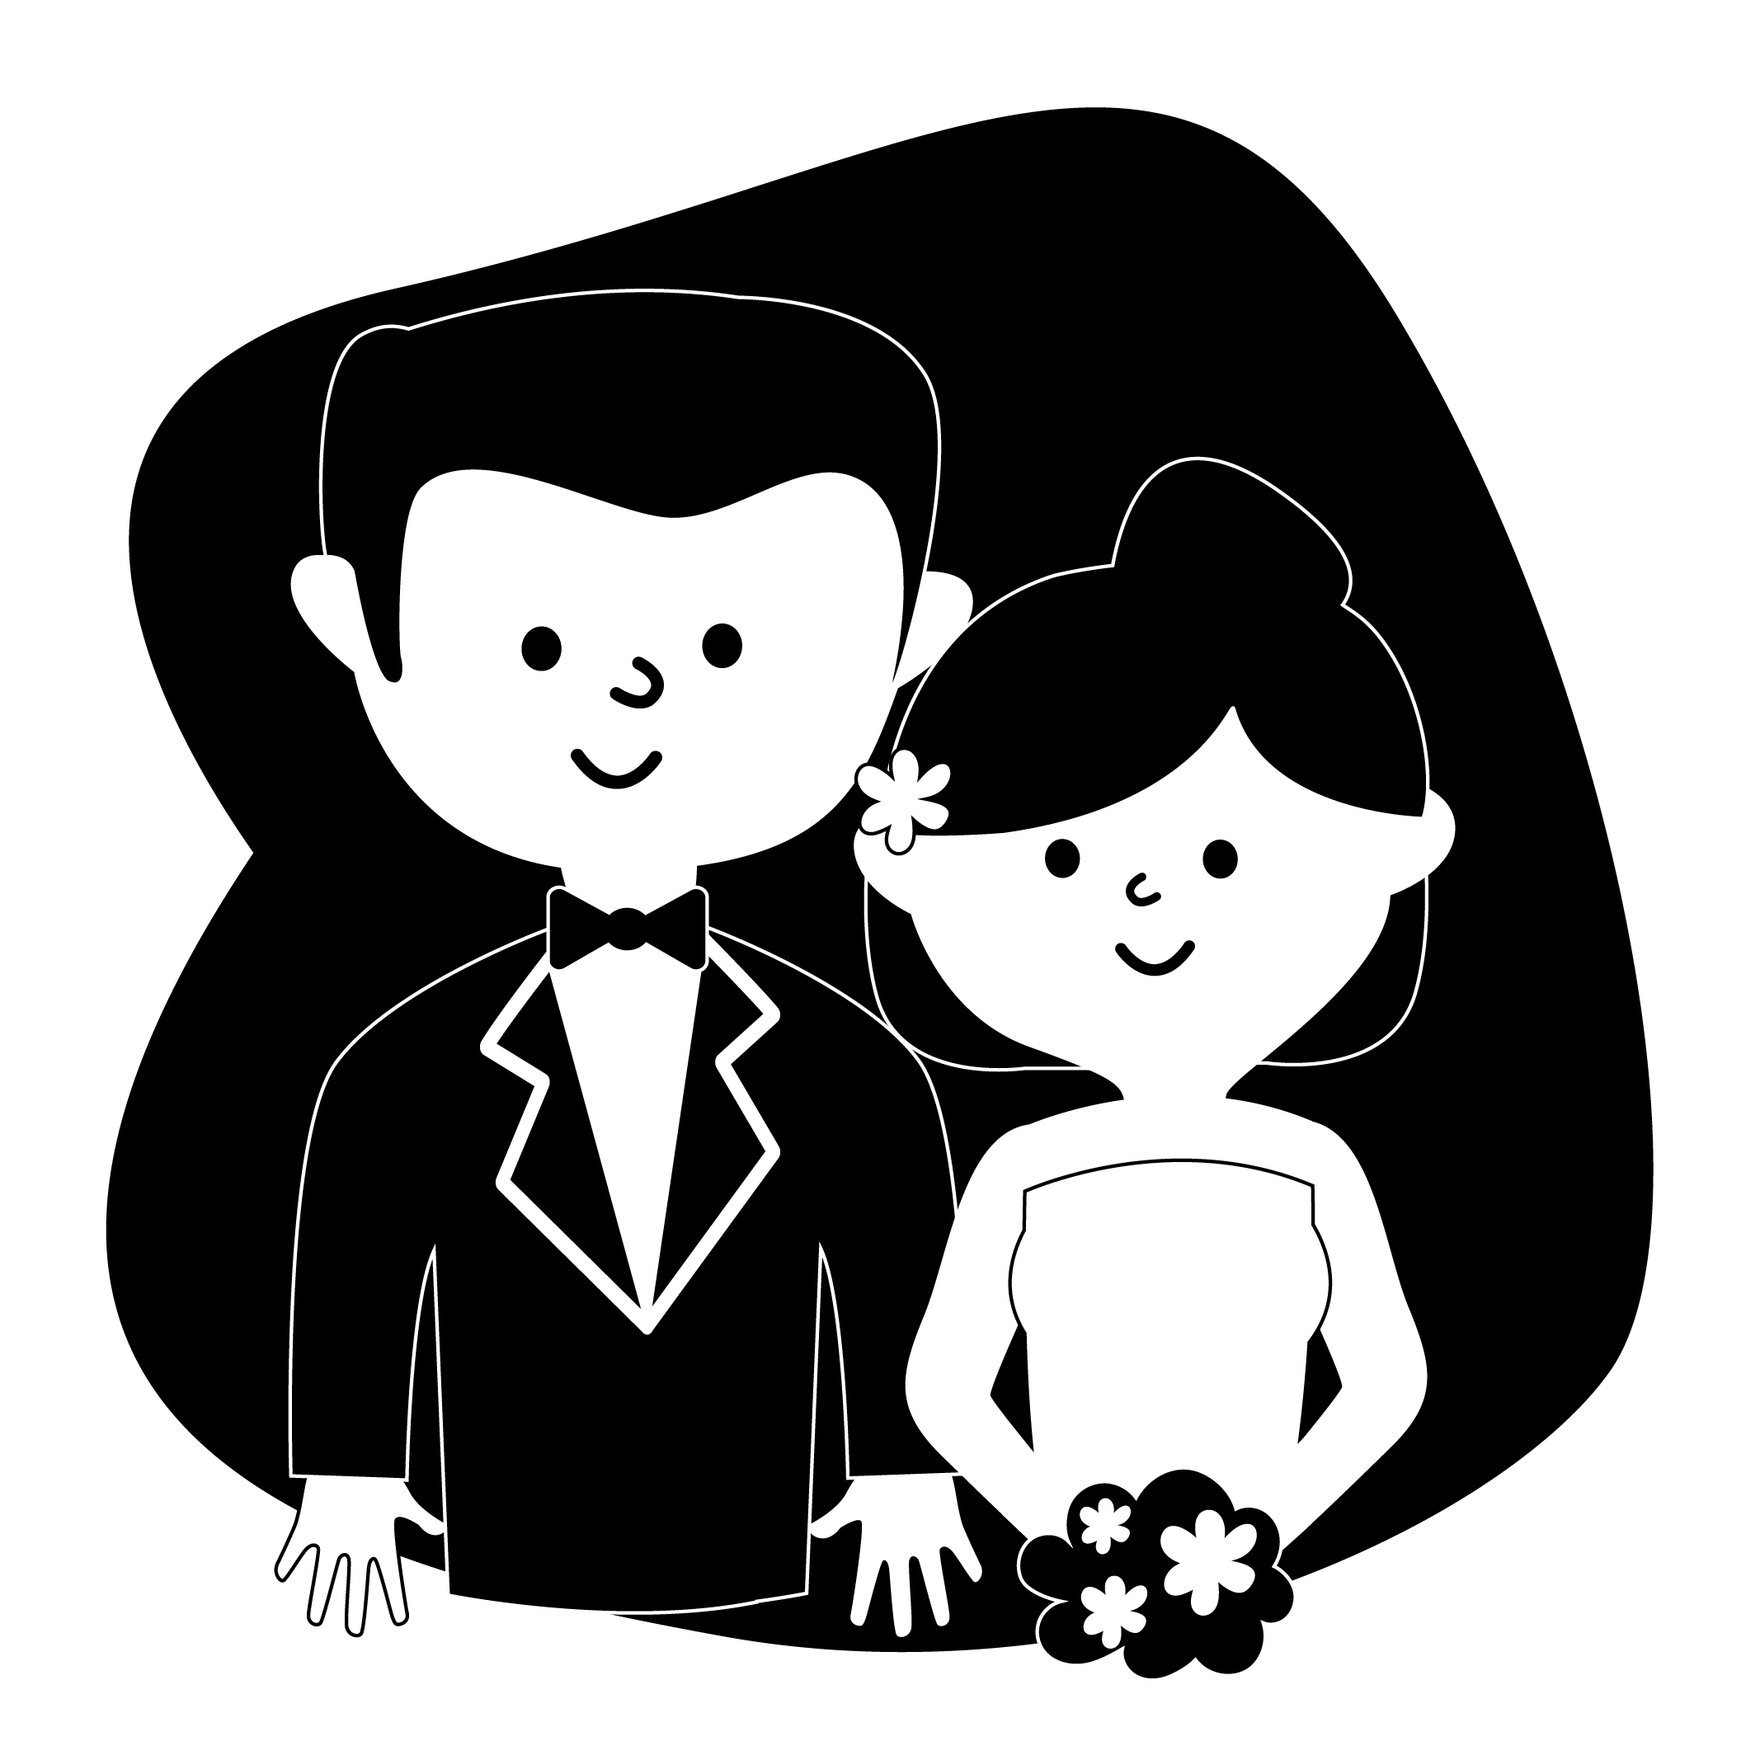 Cute Wedding Silhouette in Illustrator, EPS, SVG, JPG, PNG